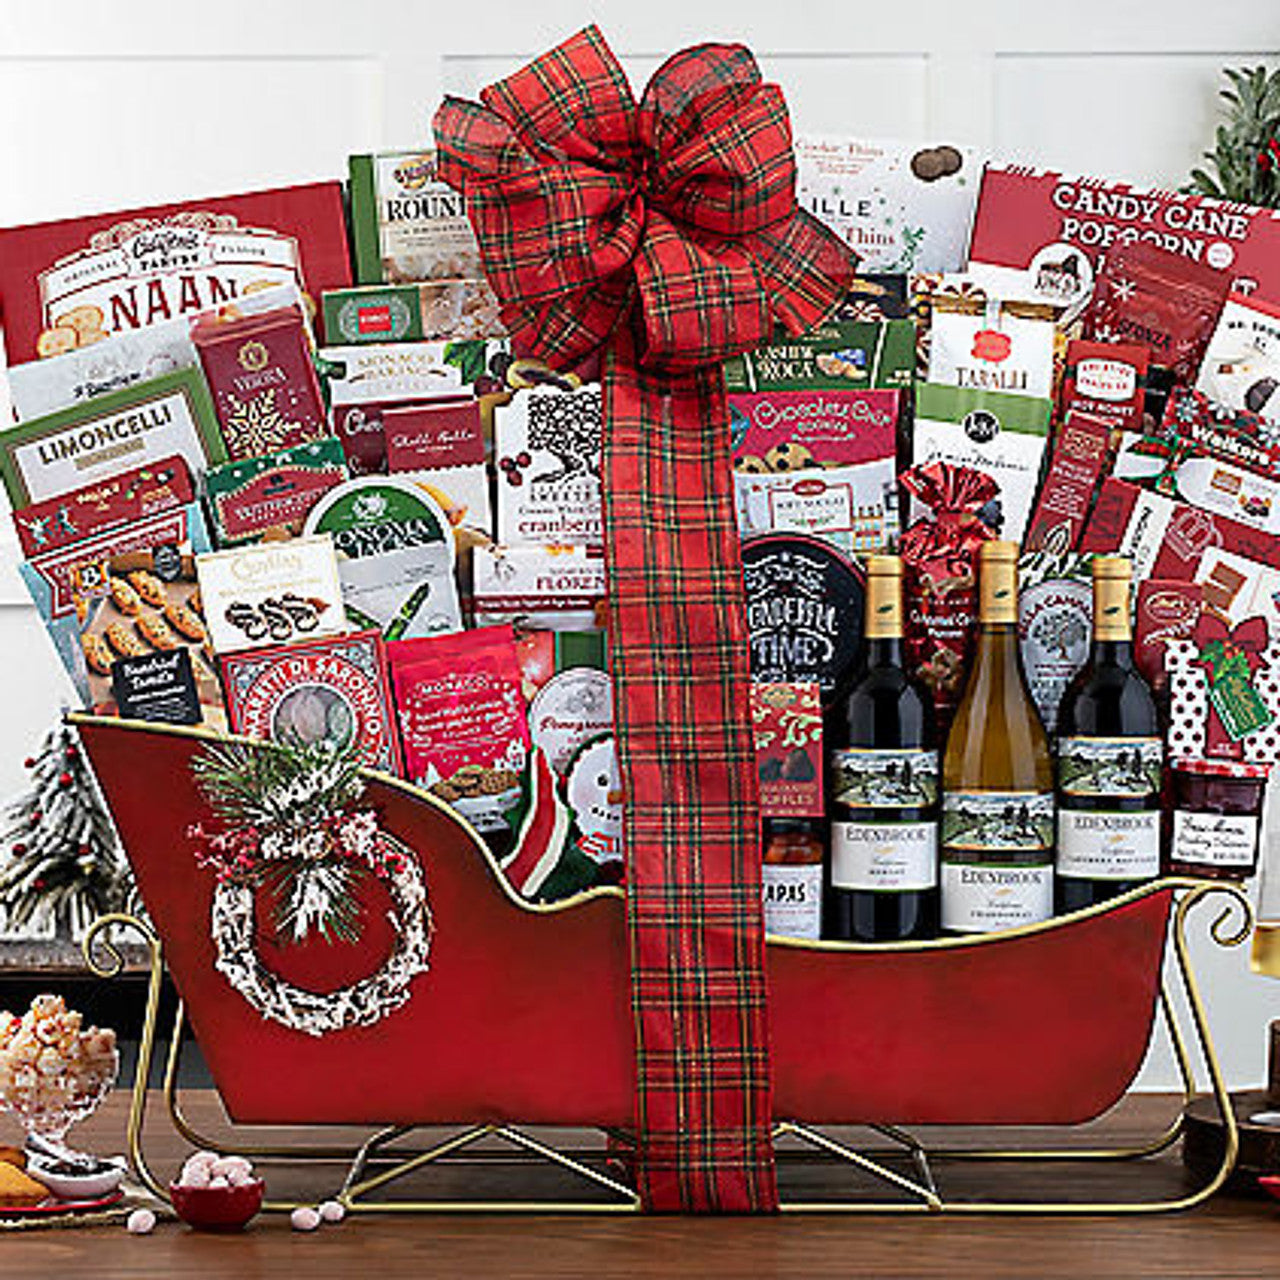 Edenbrook Collection: Holiday Sleigh Wine Basket